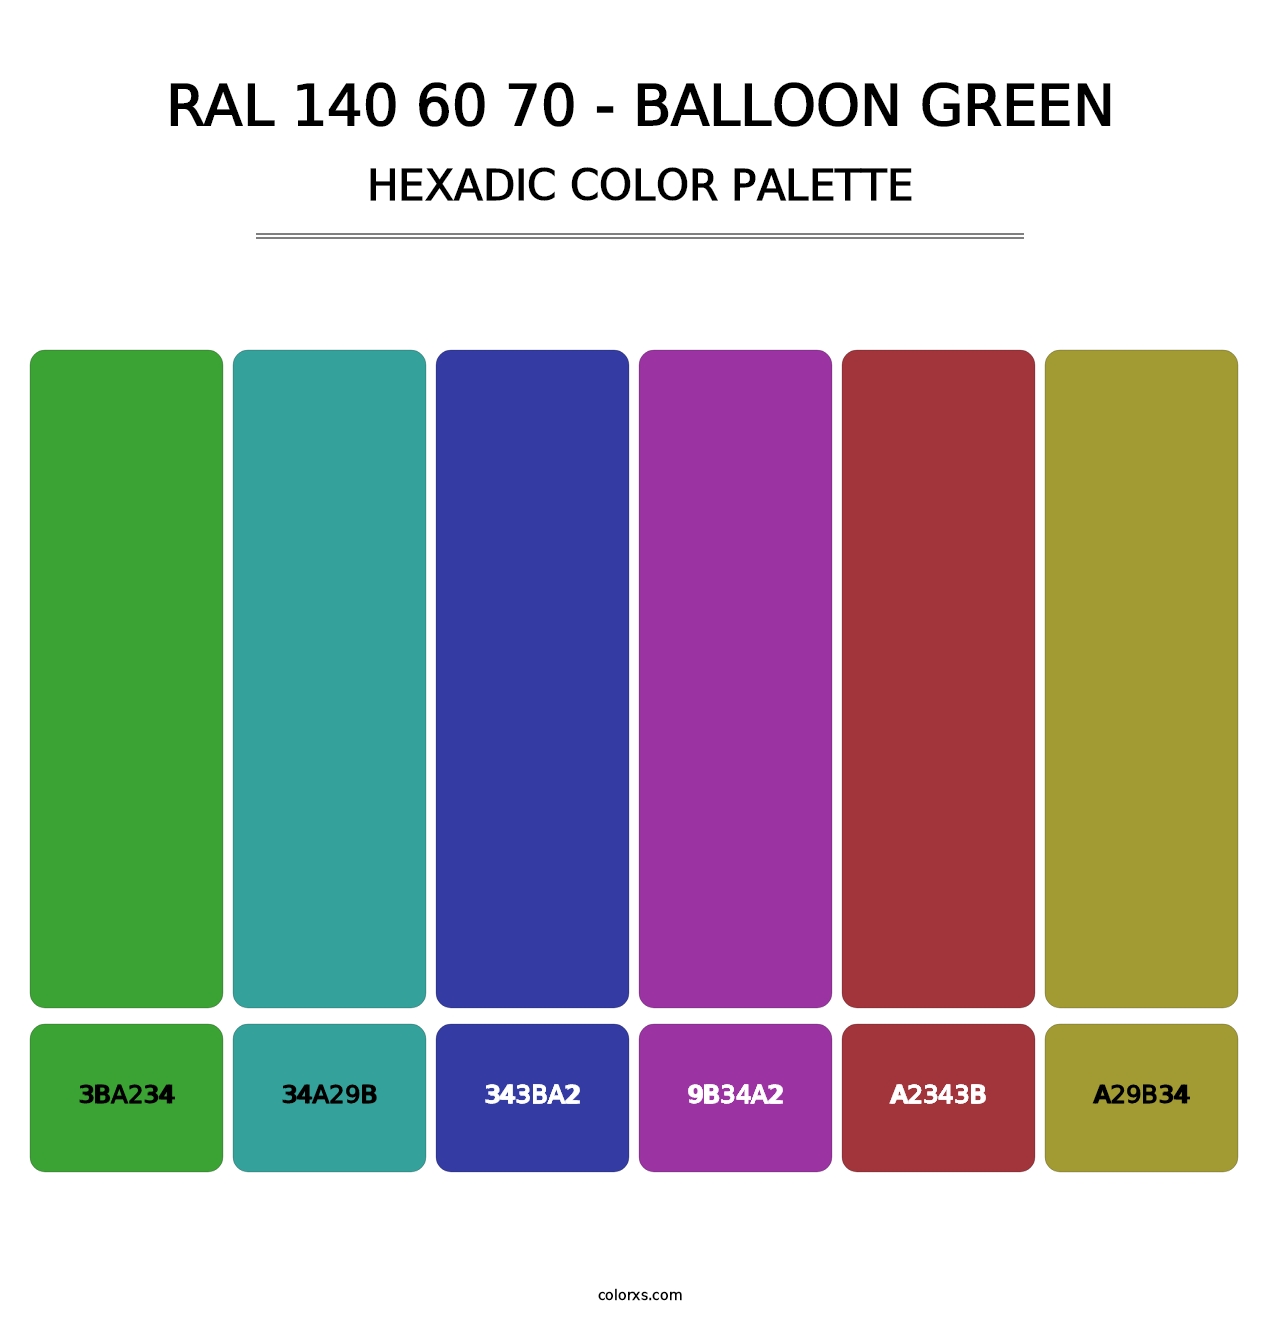 RAL 140 60 70 - Balloon Green - Hexadic Color Palette